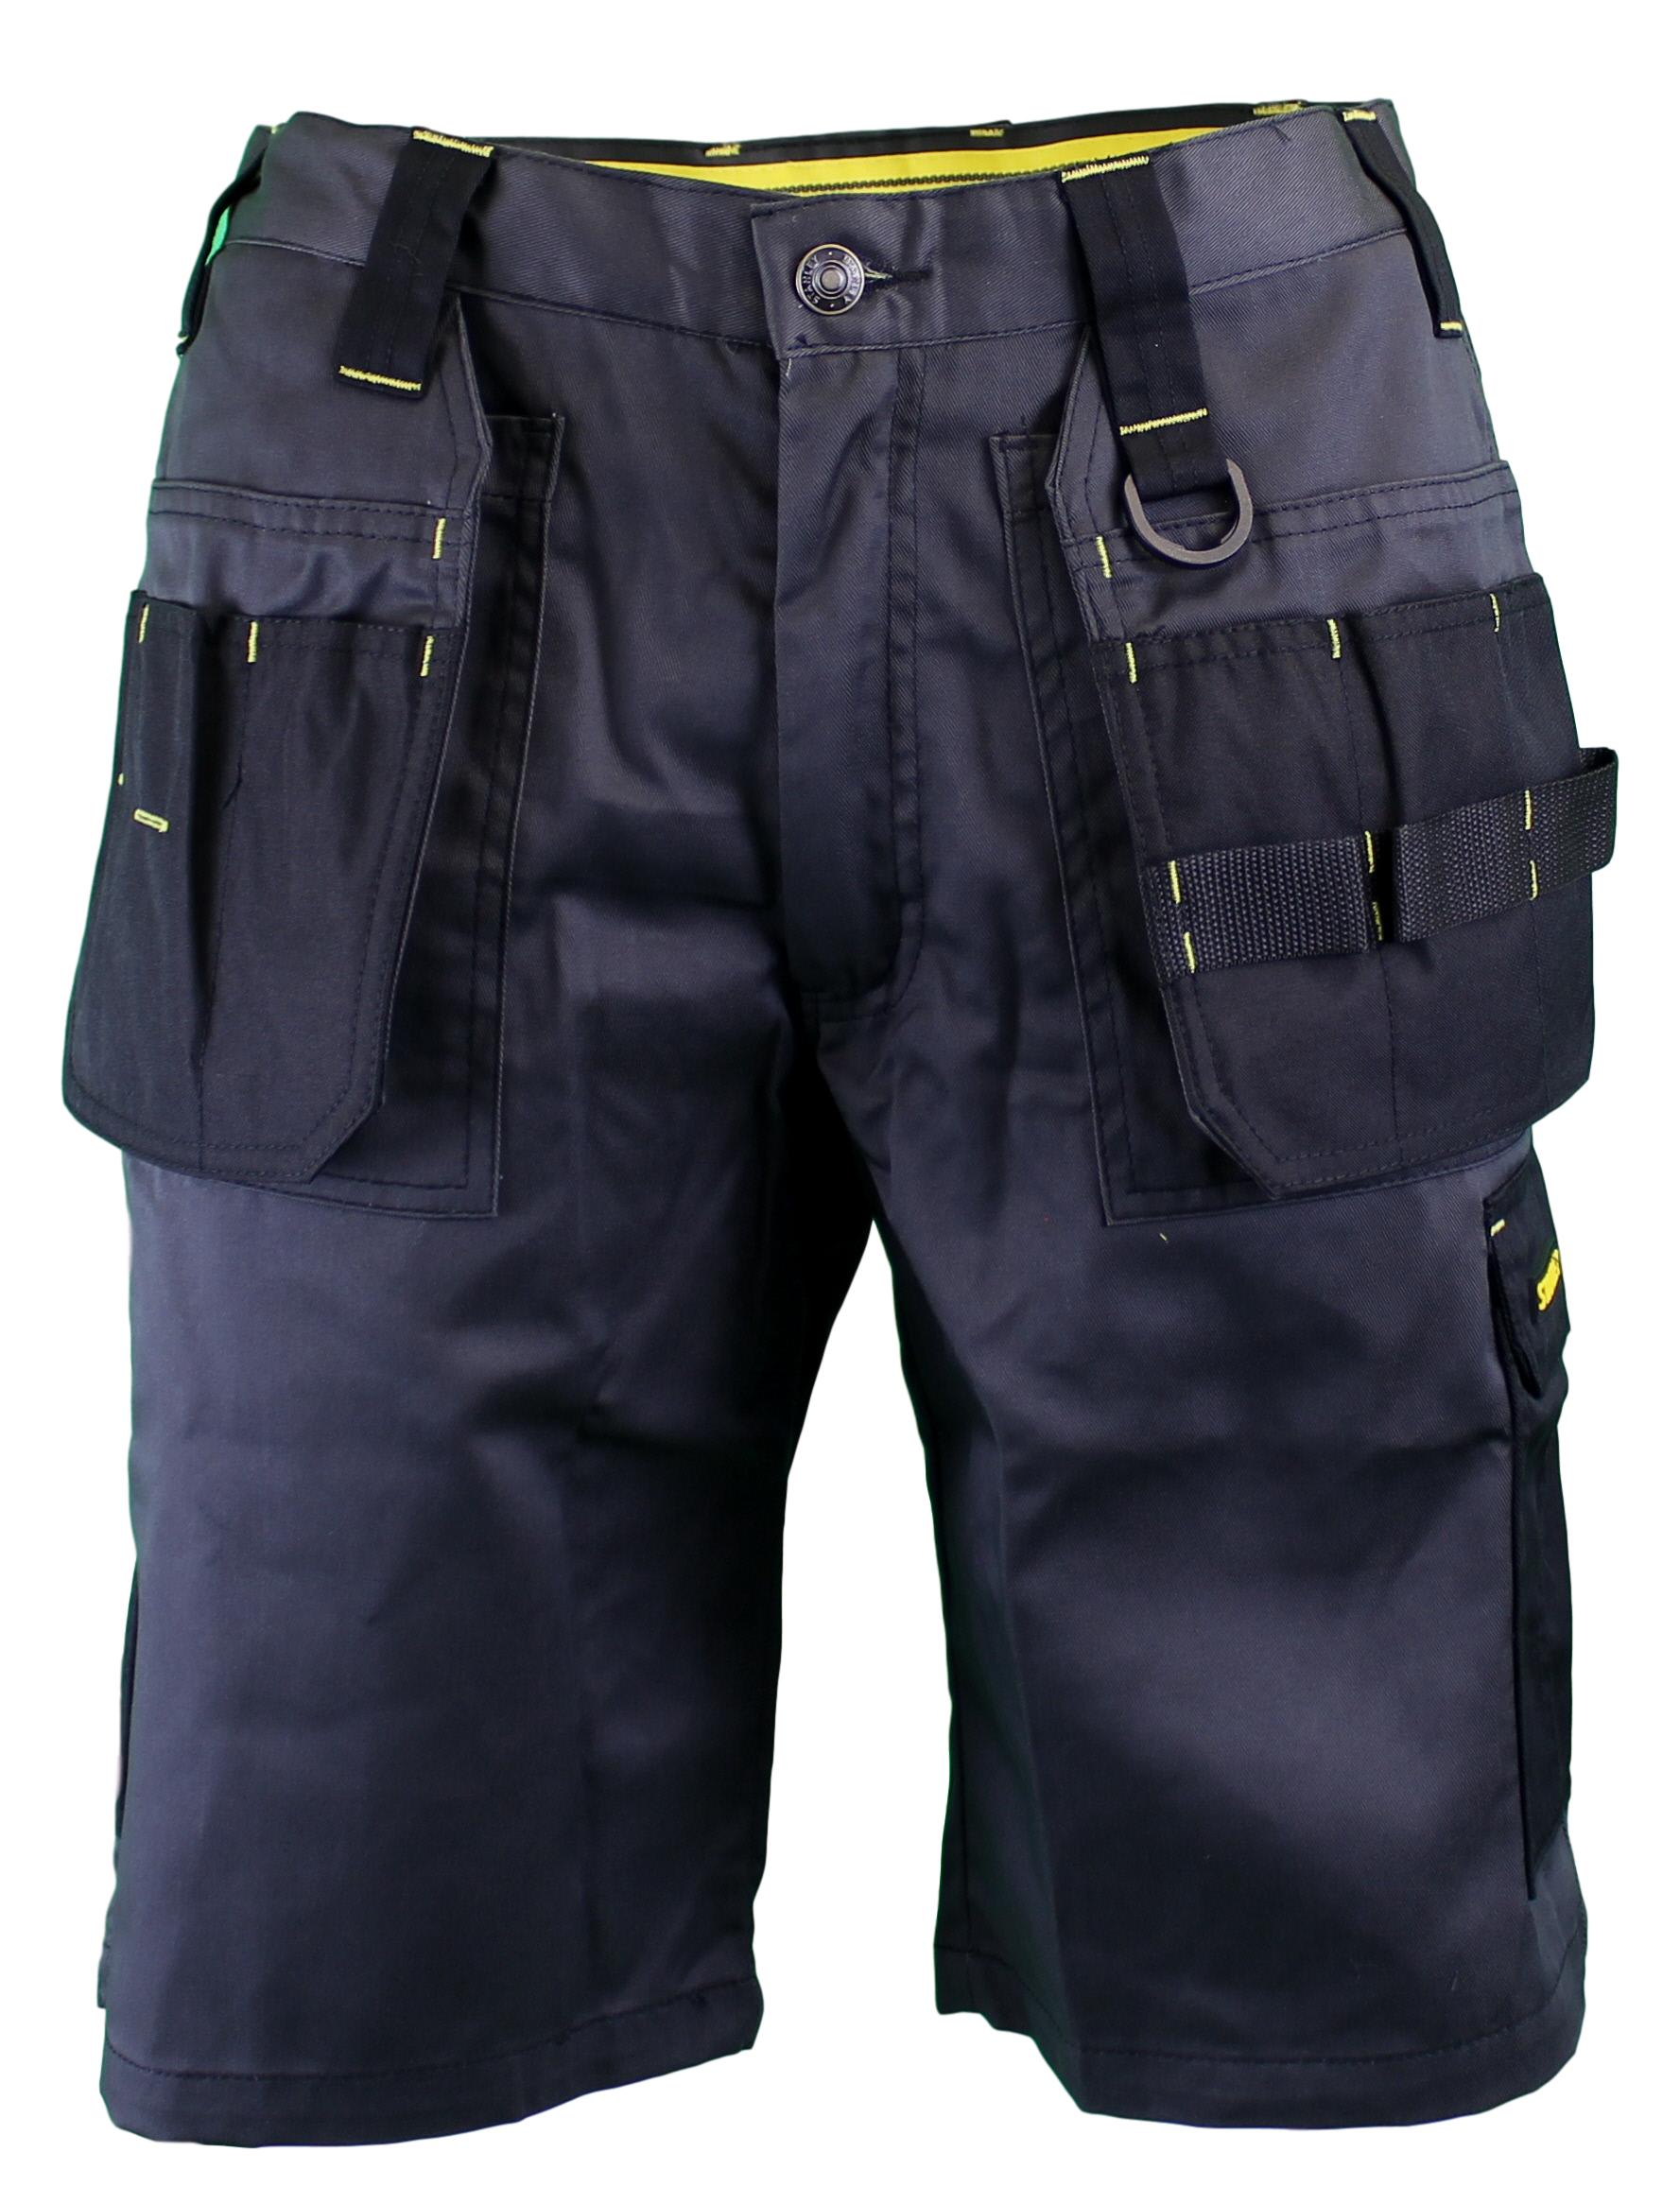 Mens Stanley Work Utility/Multi Pocket Cargo Shorts Waist Sizes 30